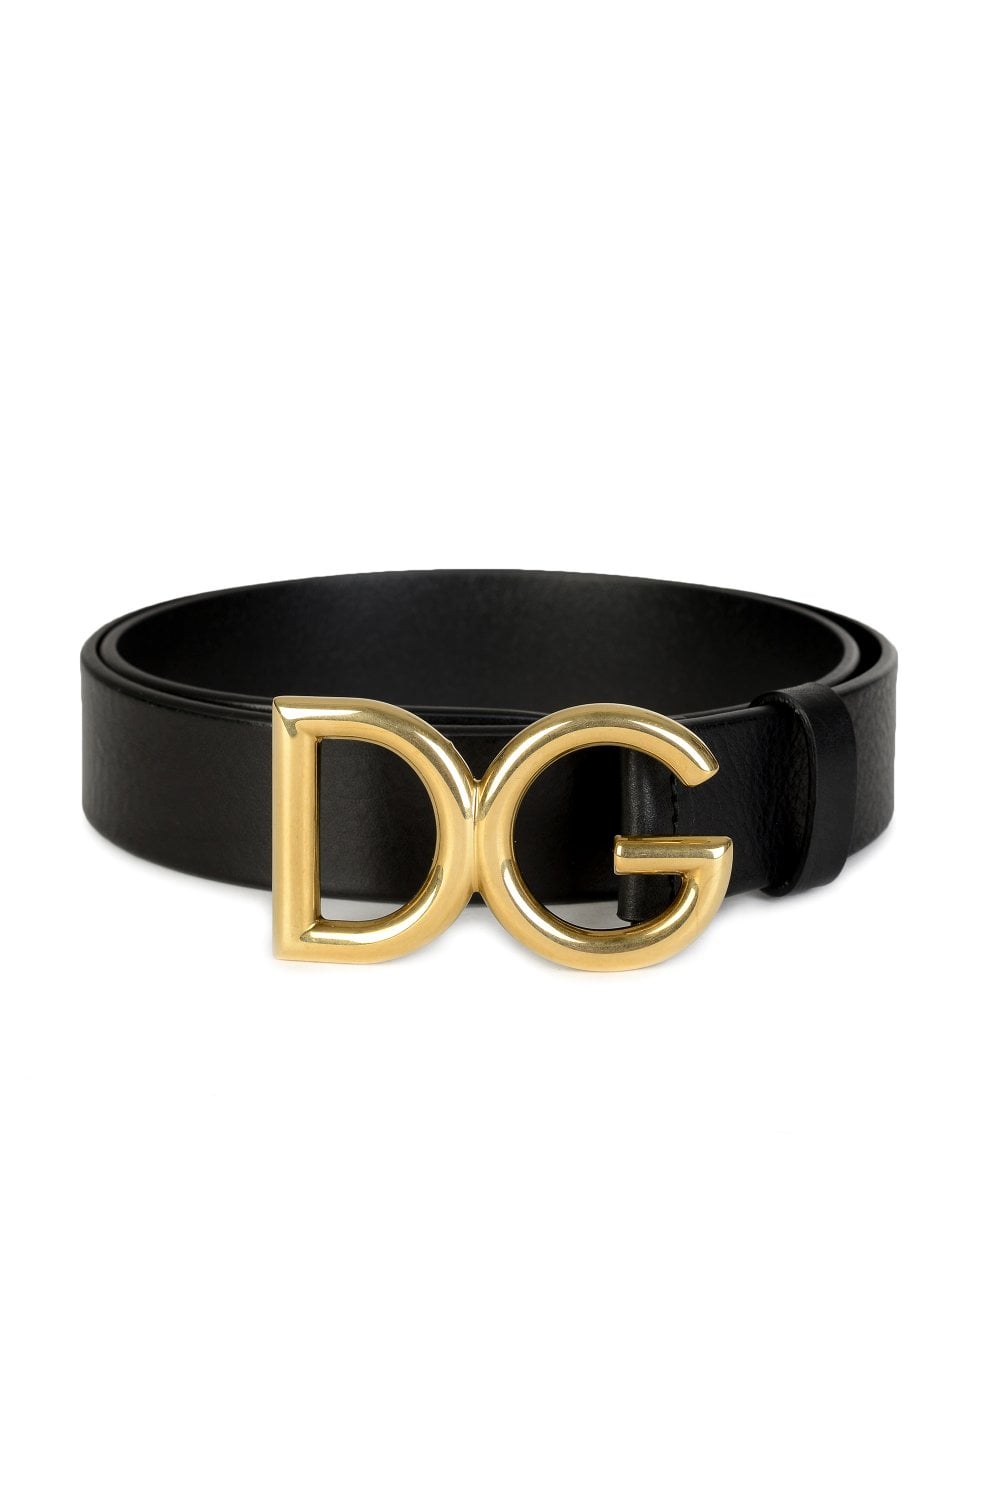 Buckle Clothing Logo - DOLCE & GABBANA DG Logo Buckle Belt Black - Clothing from Circle ...